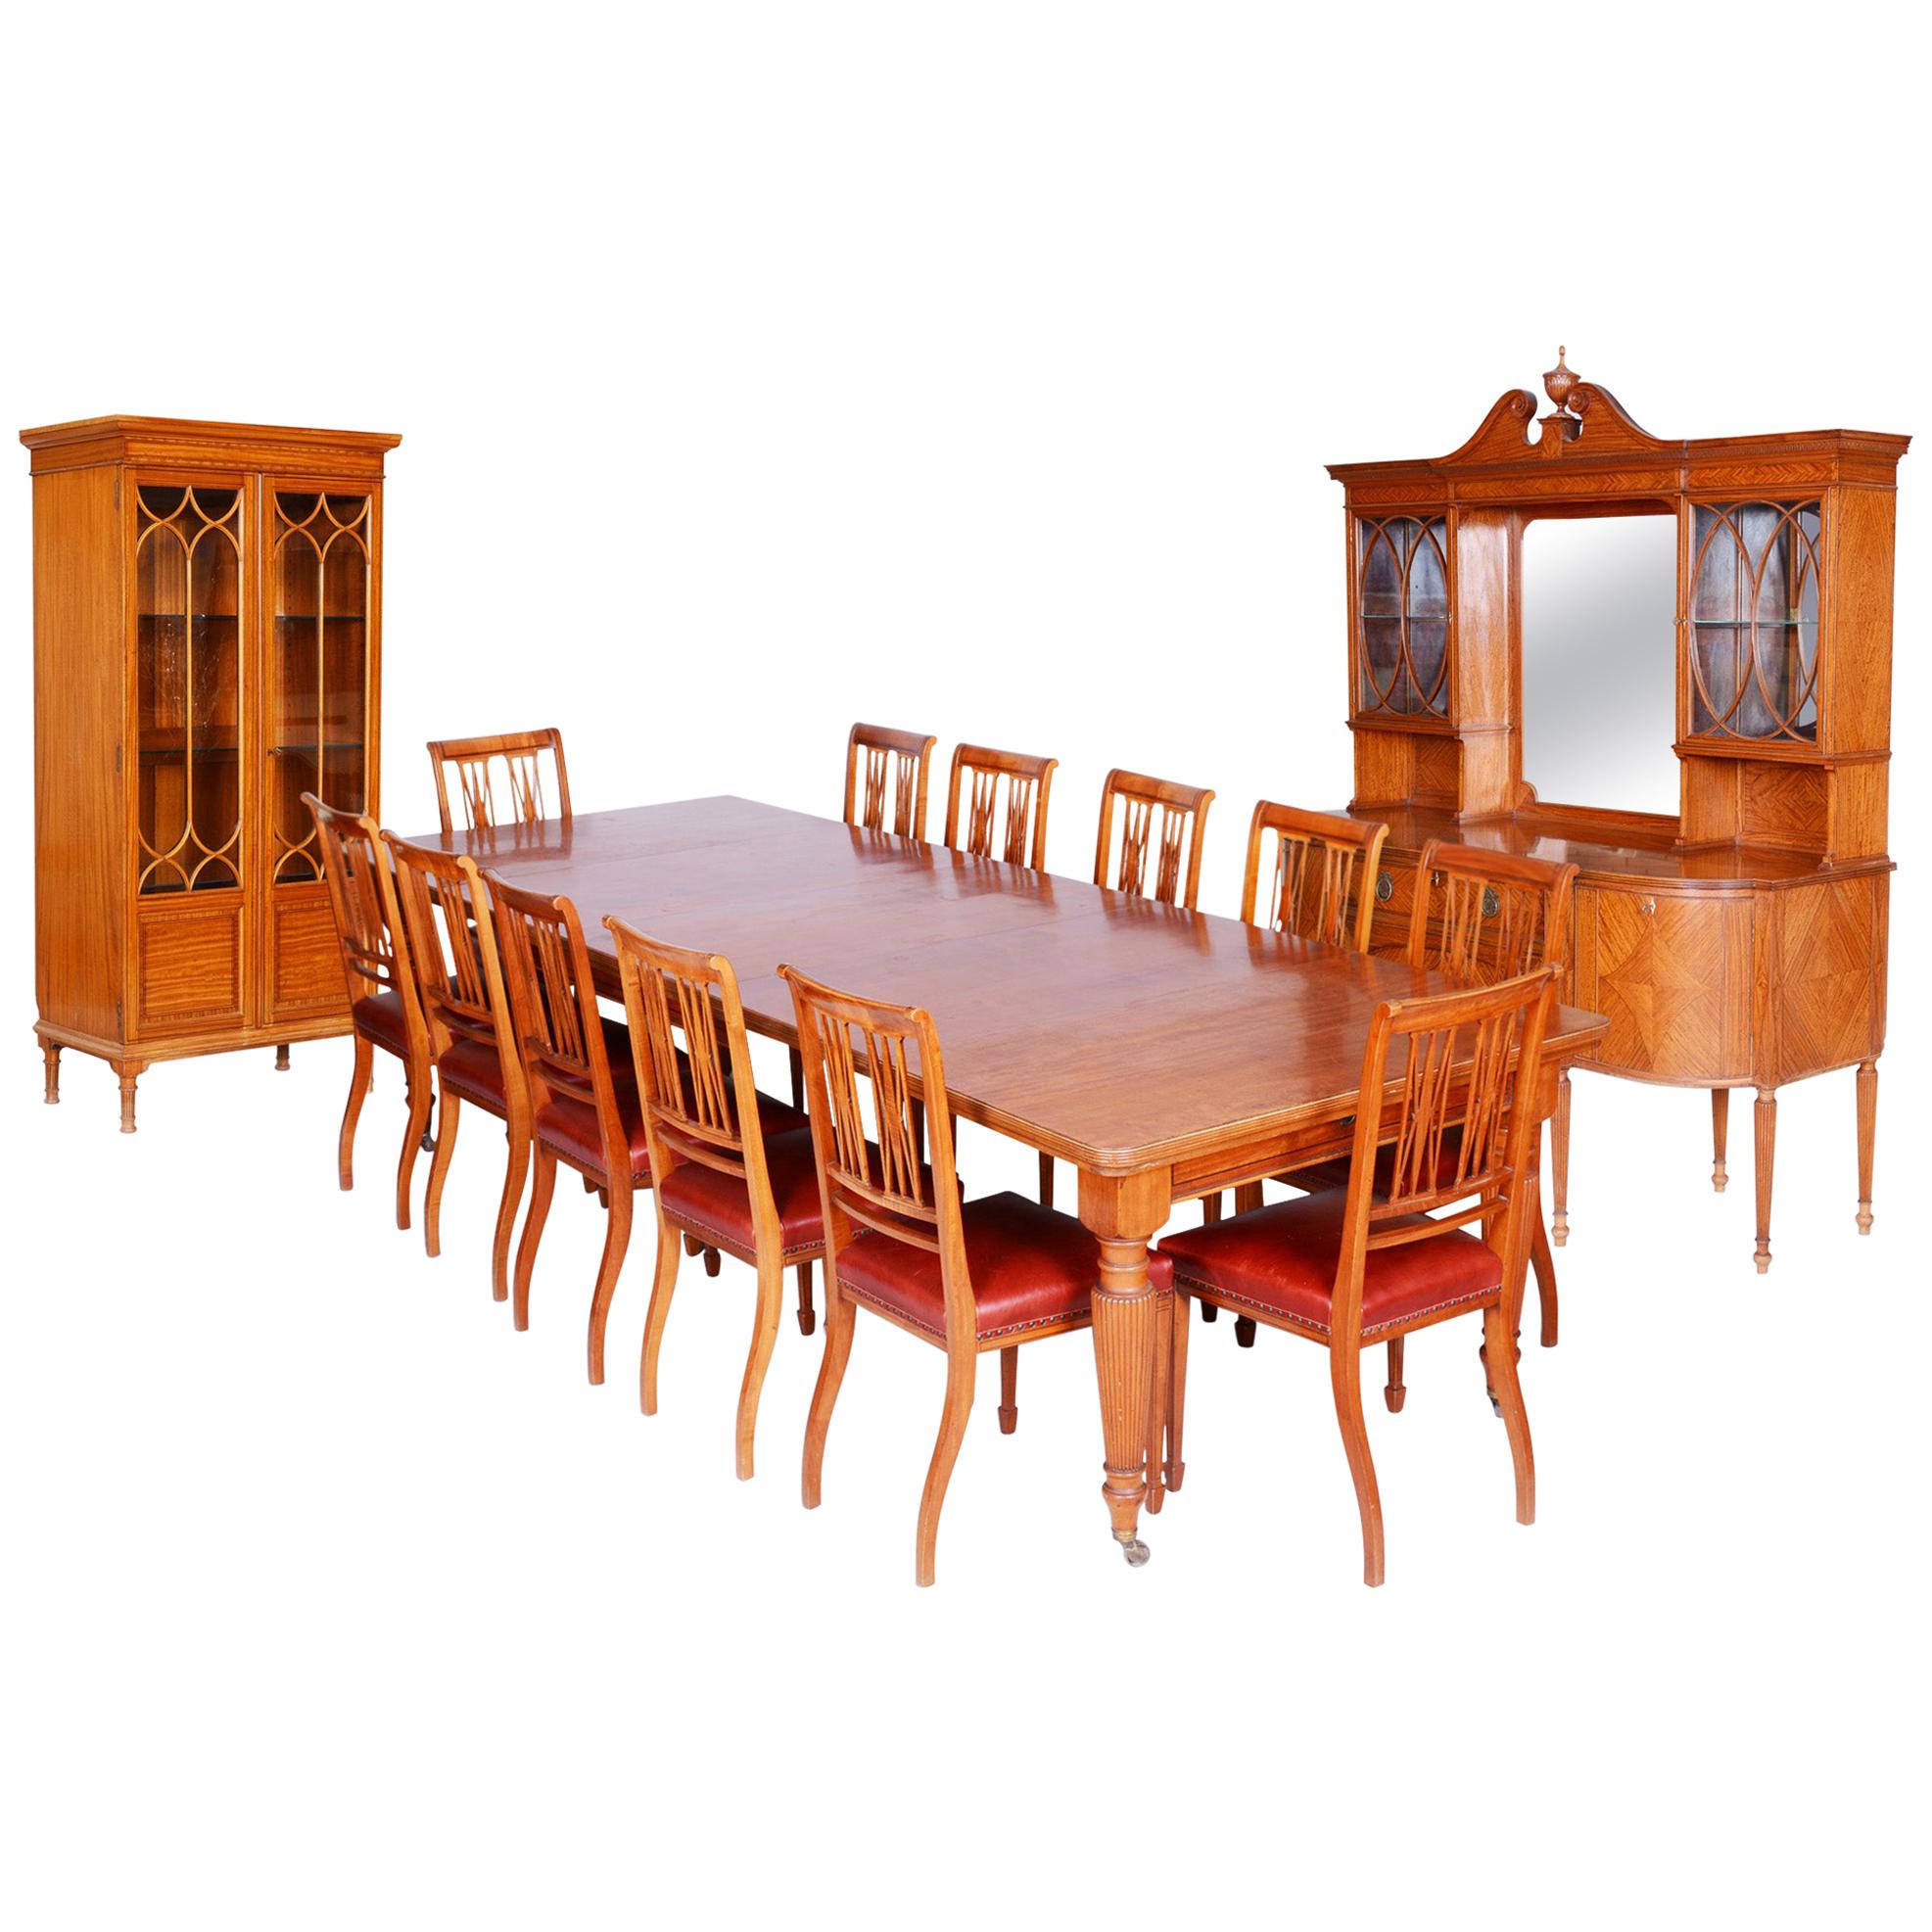 19th Century Original Rare British Dinning Room Set with 12 Chairs, Satin Wood